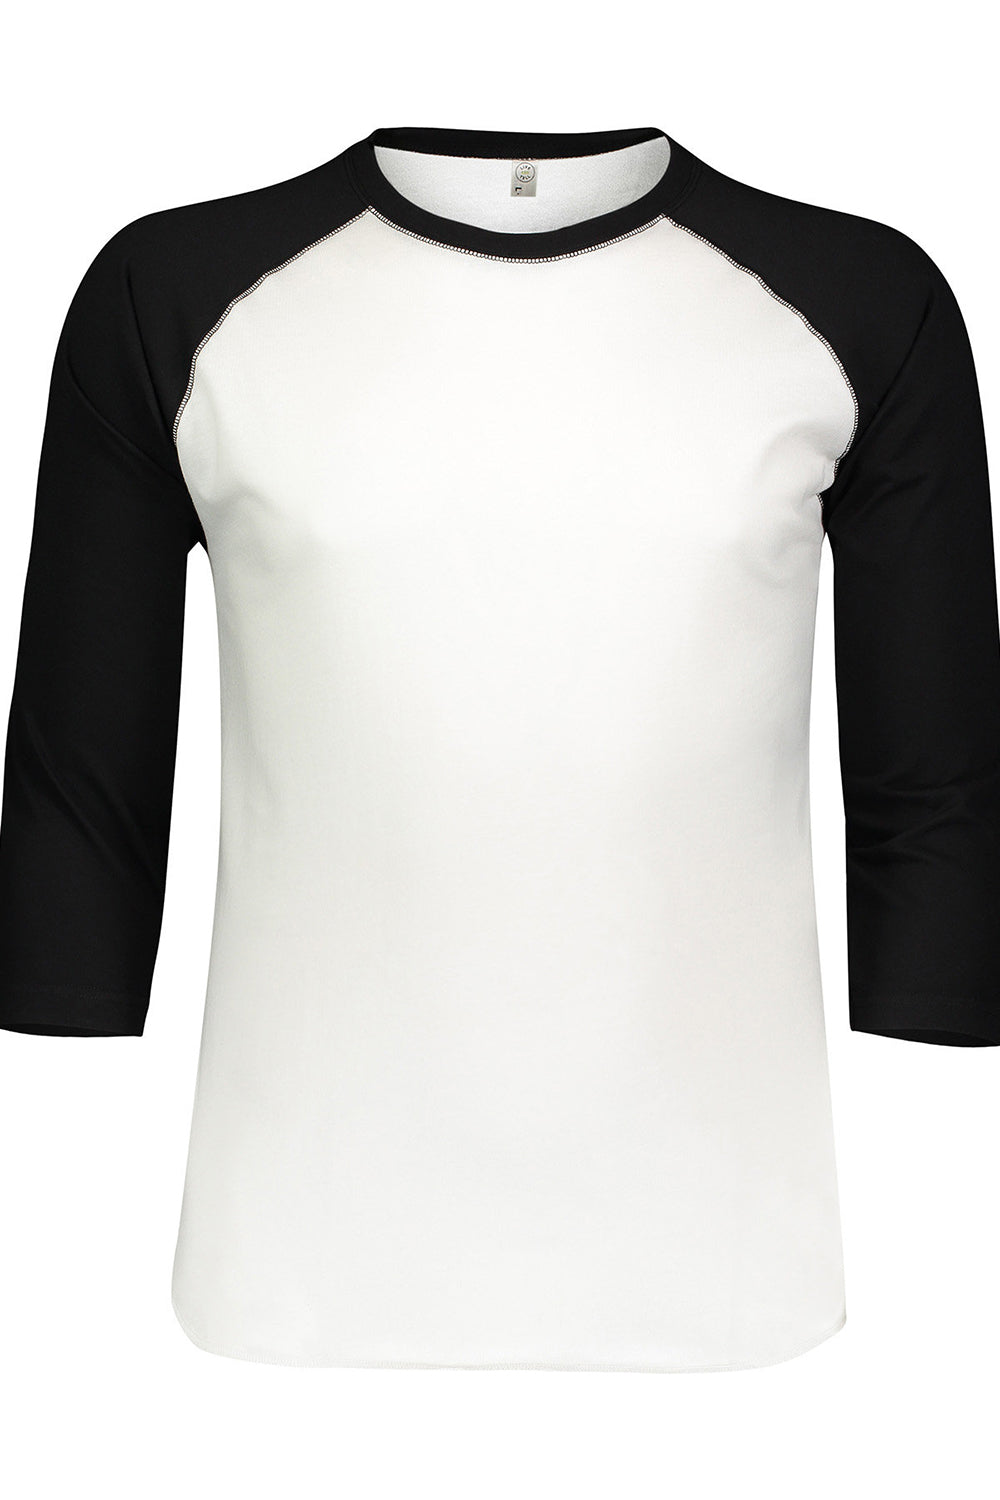 LAT 6930 Mens Fine Jersey Baseball 3/4 Sleeve Crewneck T-Shirt White/Black Flat Front